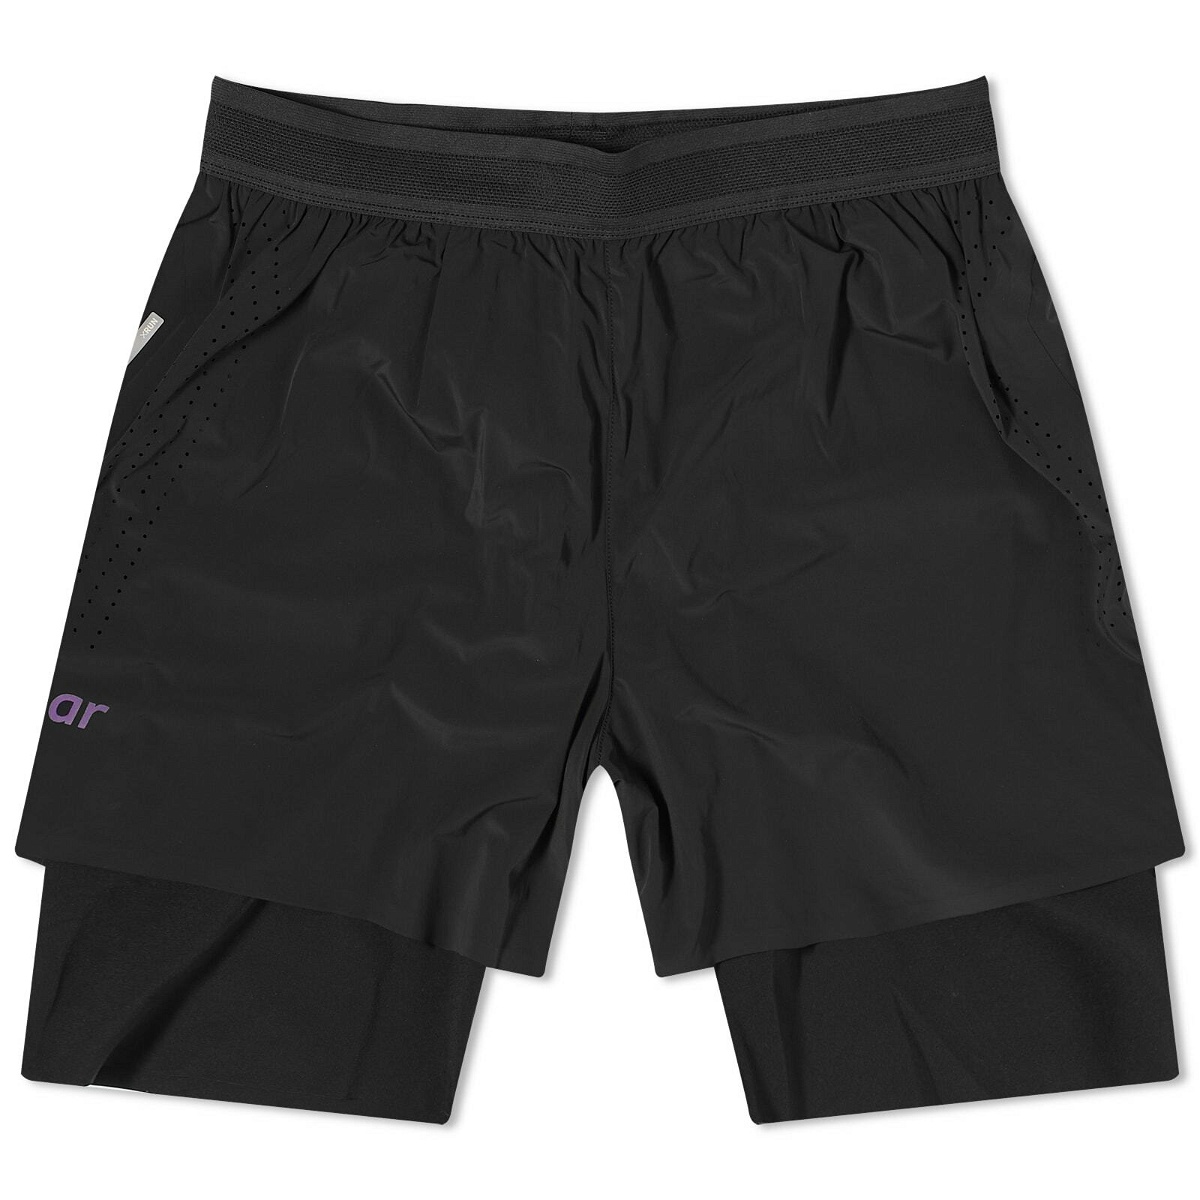 Photo: SOAR Men's Dual Run Shorts in Black